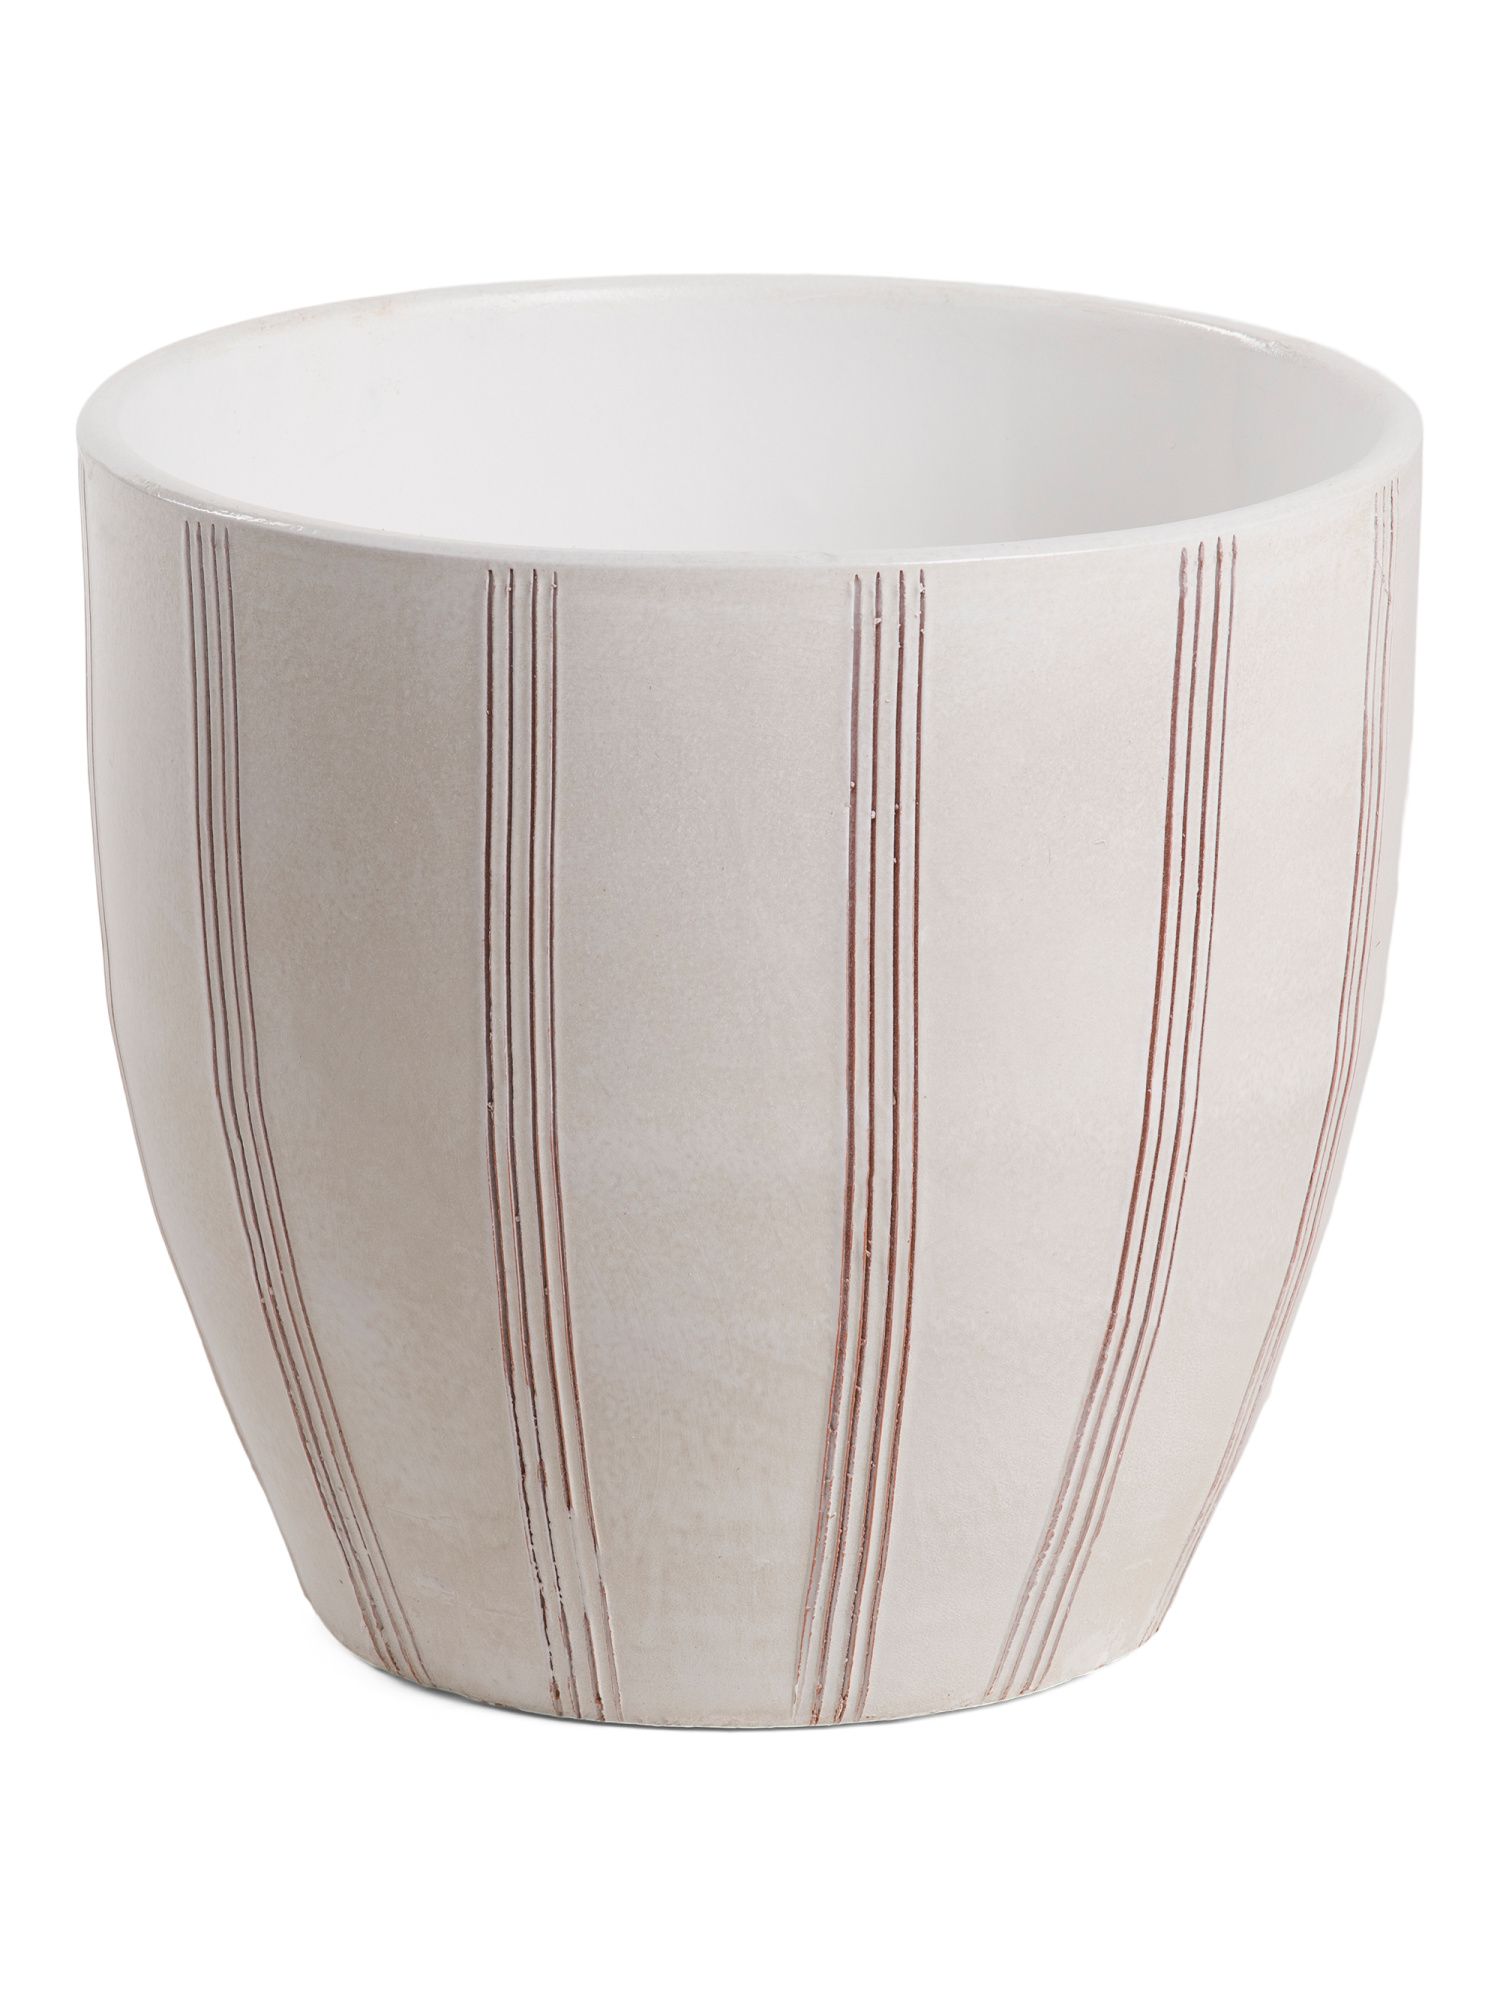 Large Global Striped Ceramic Planter | TJ Maxx